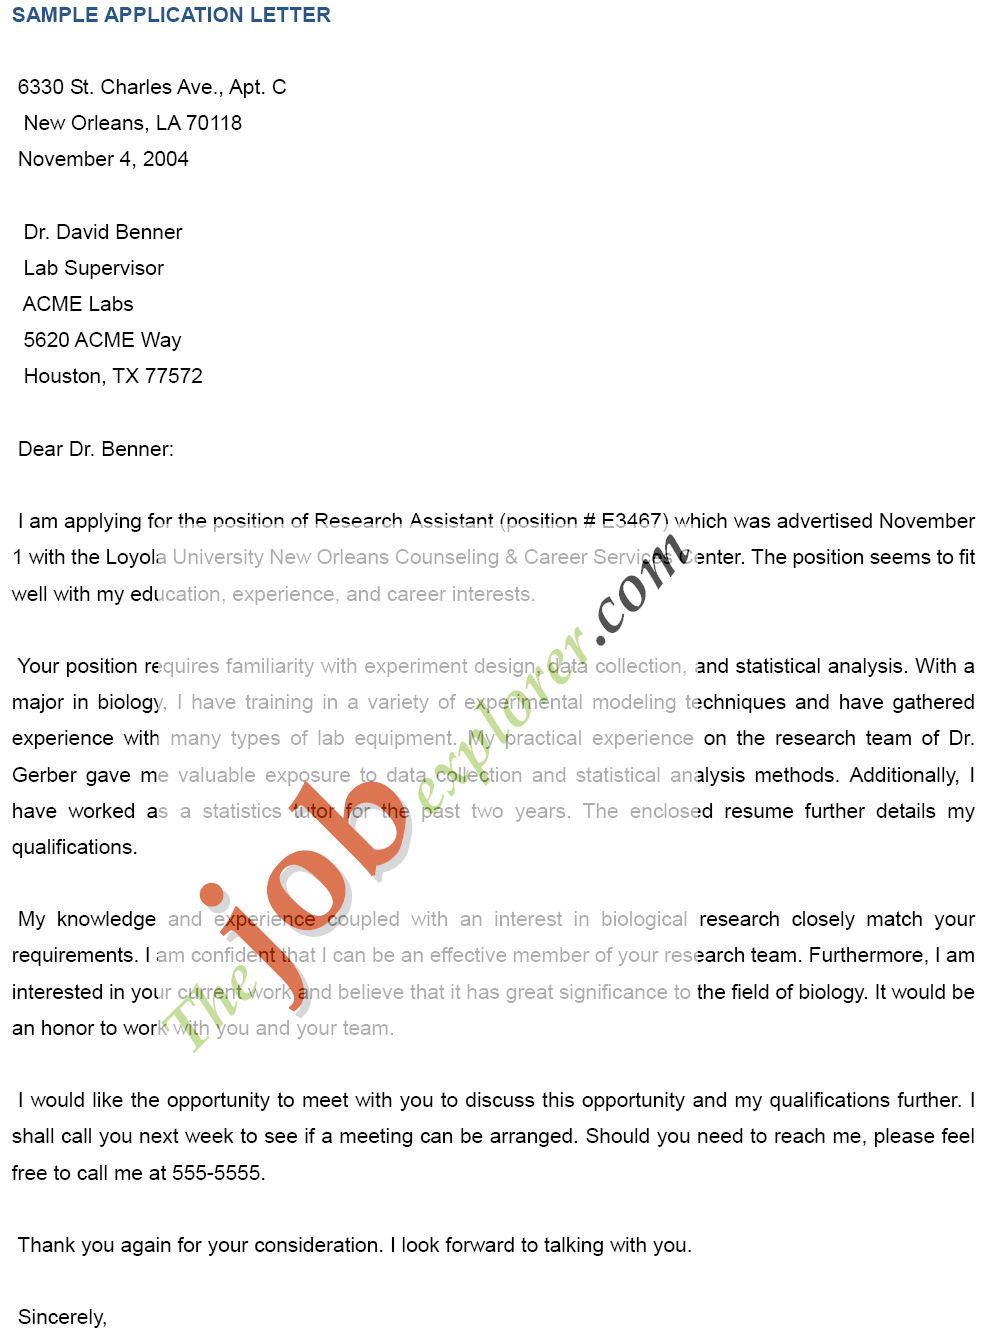 an application letter